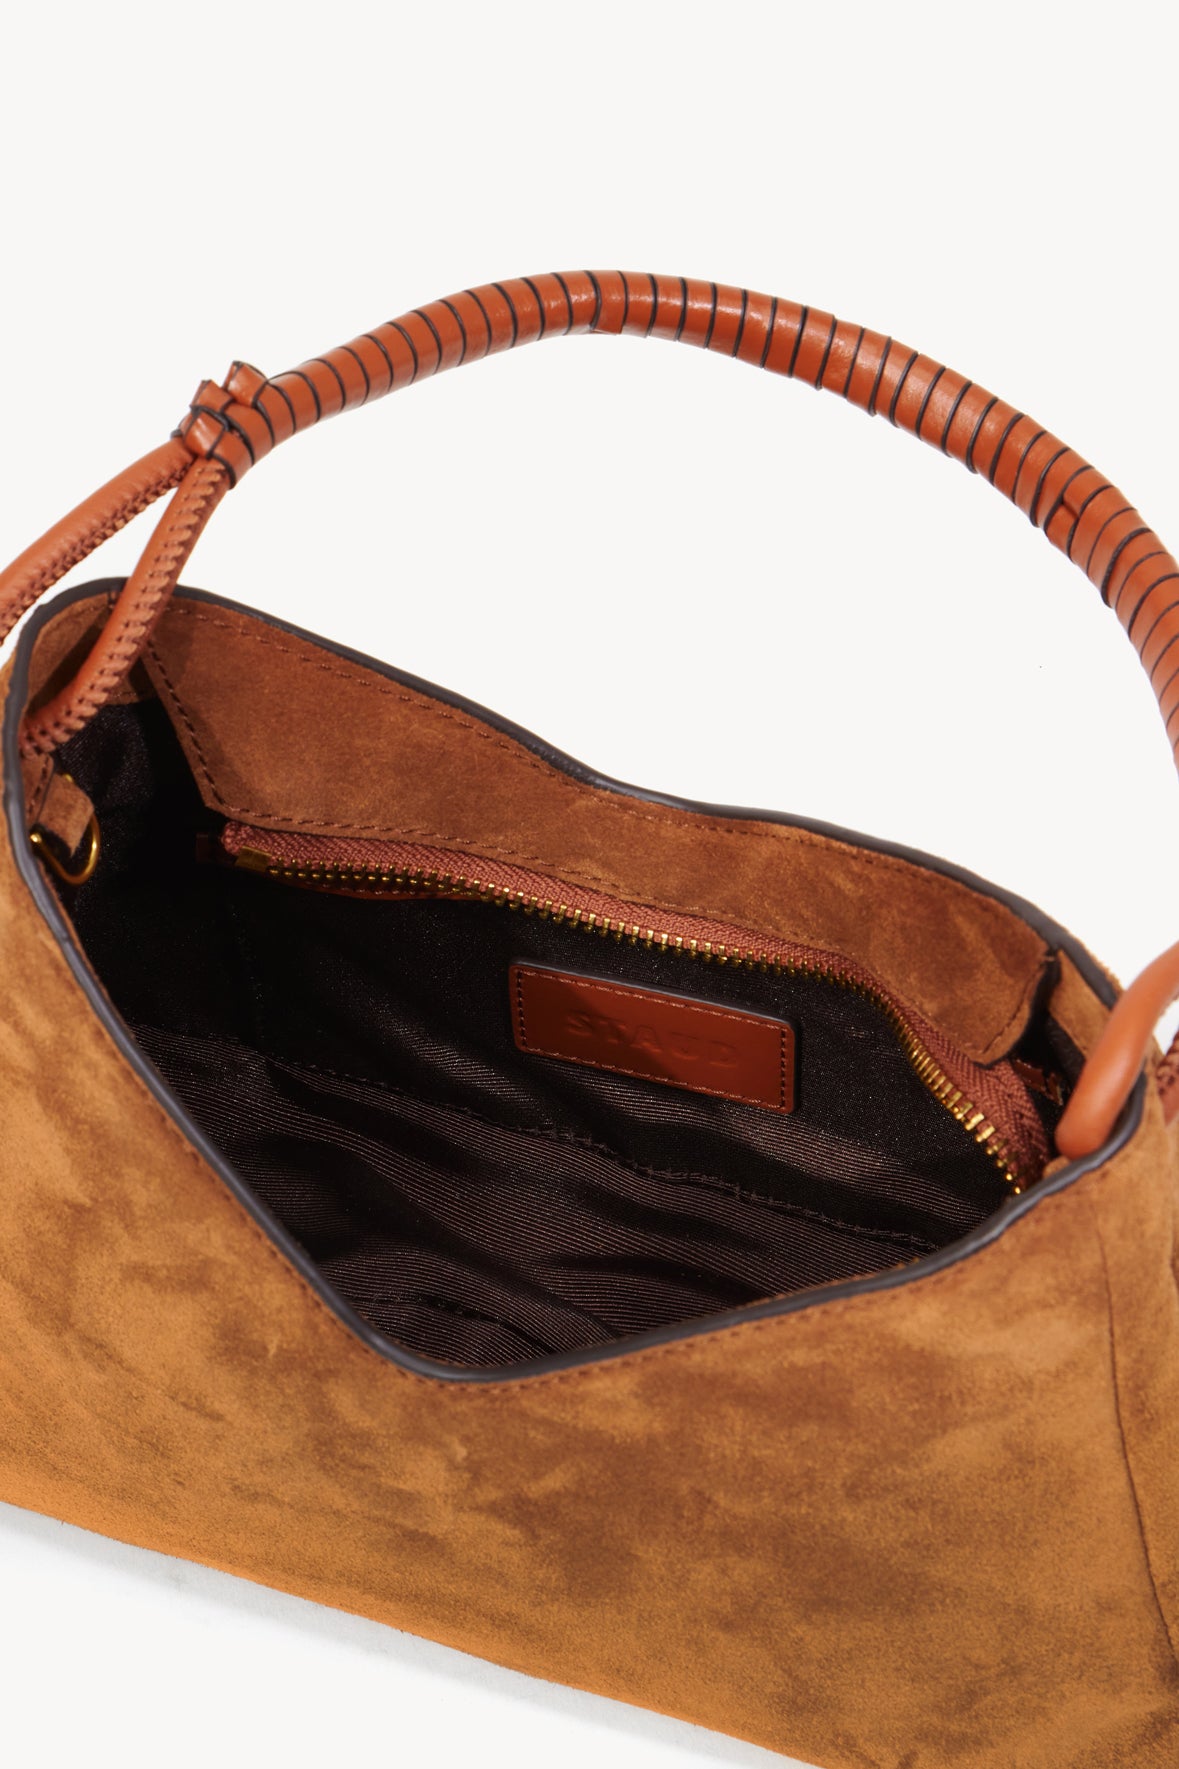 Staud Valerie Patent Leather Shoulder Bag